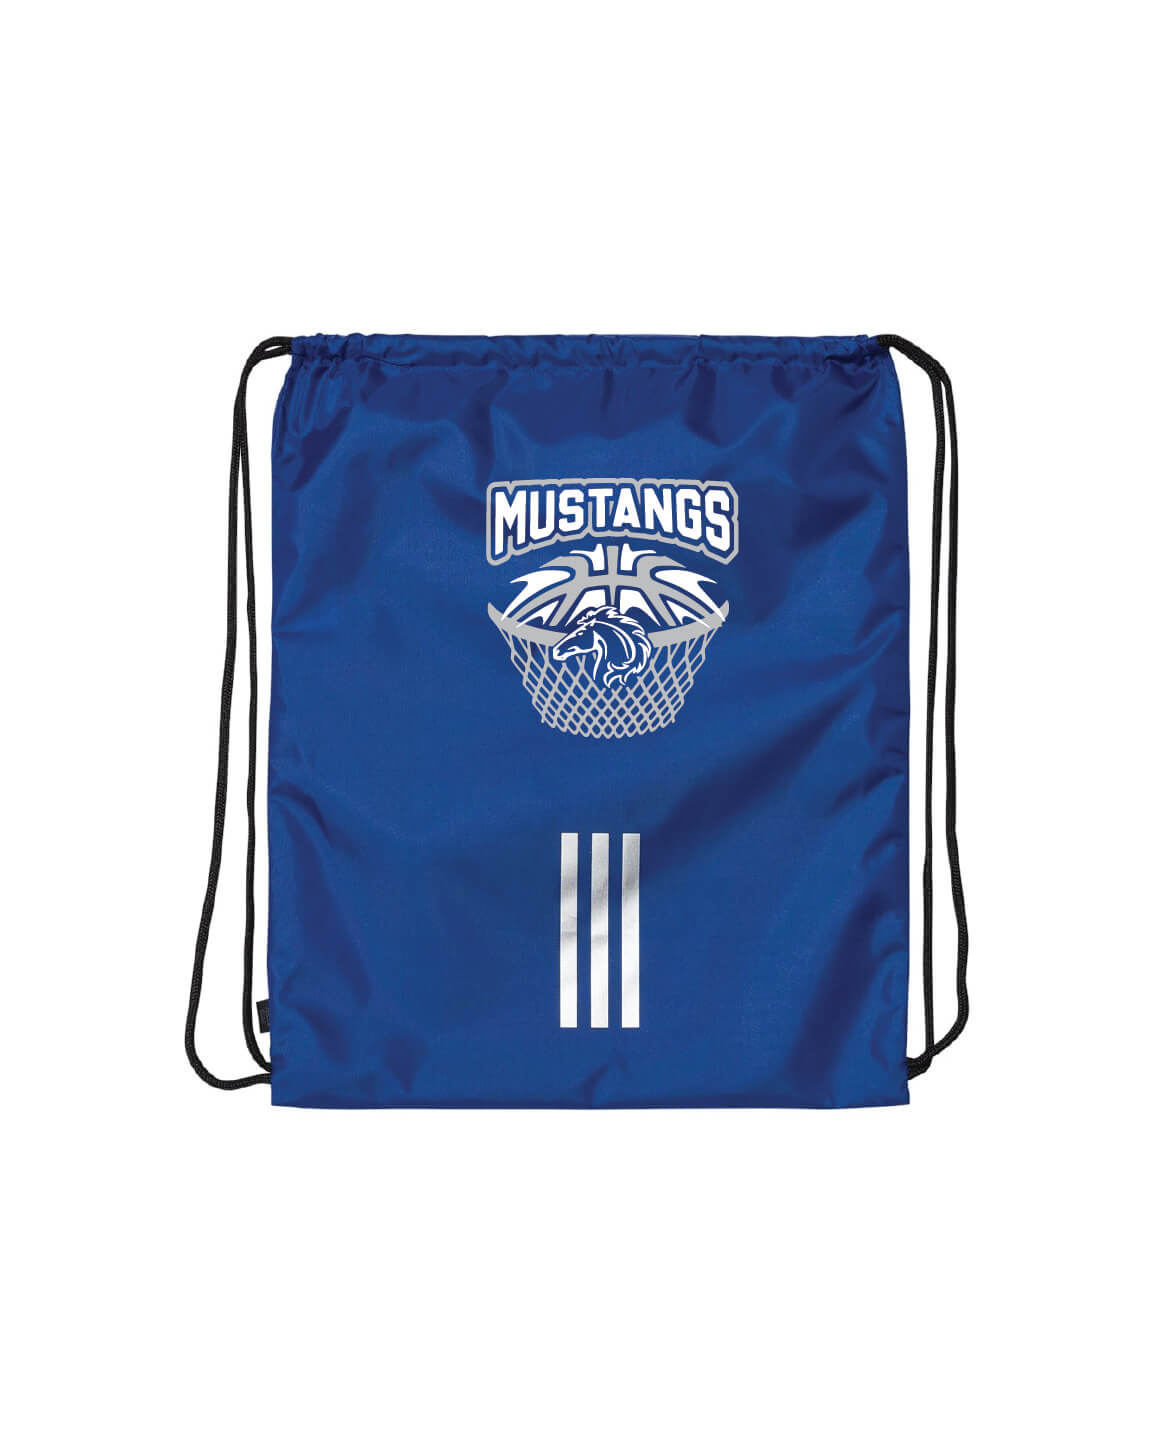 Adidas Cinch Pack Mustangs Basketball